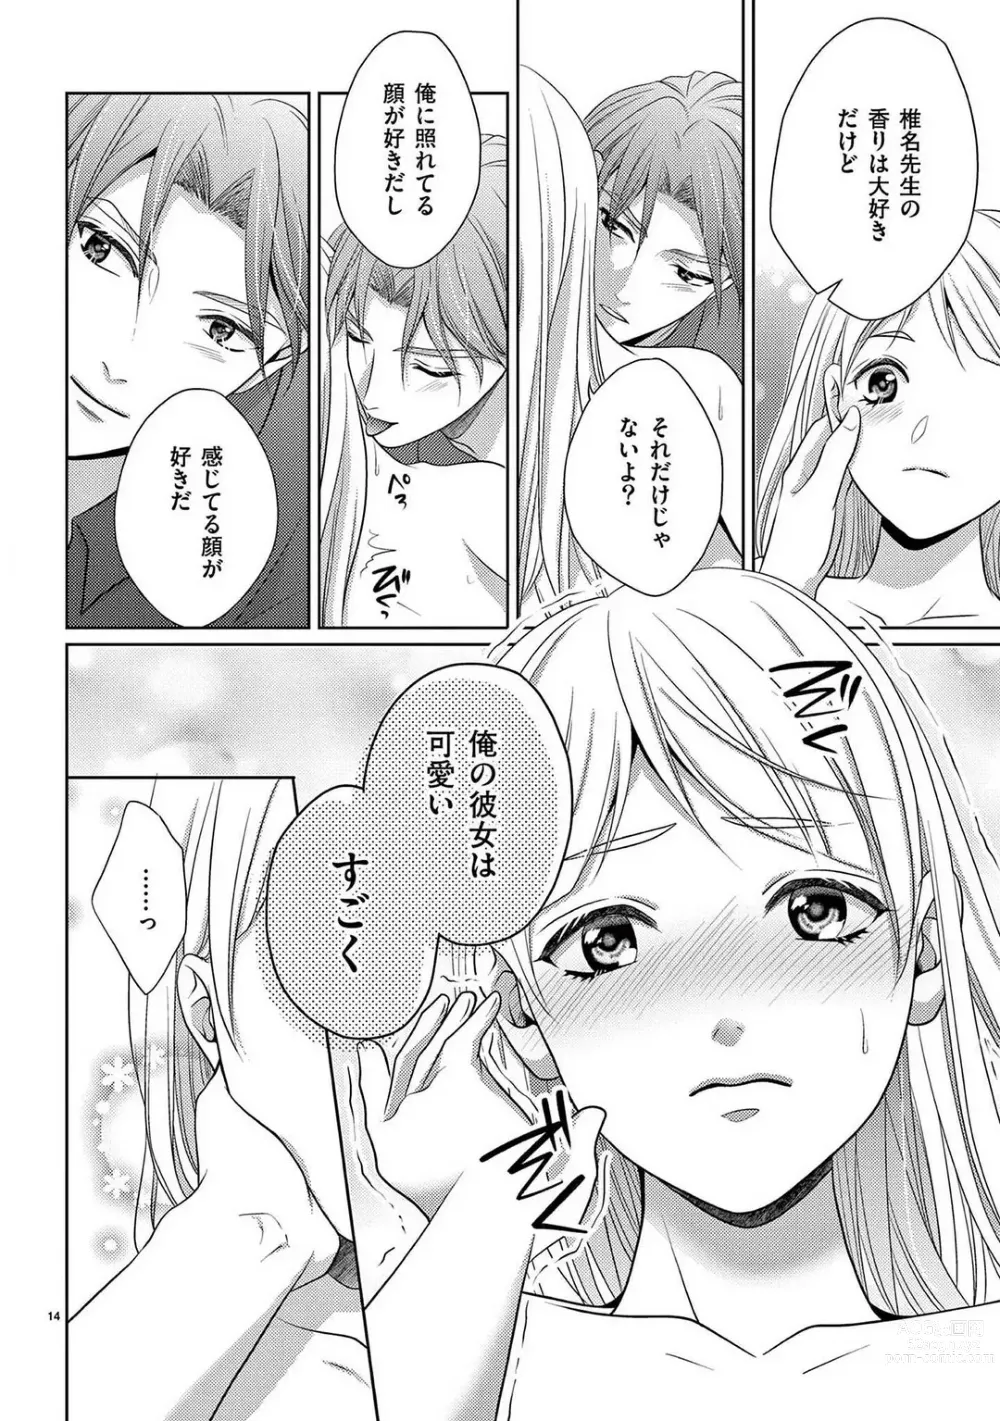 Page 175 of manga Sono Ase, Sekkusu Pafuyūmu. 〜 Sutte, Kisushite, Musabotte~Chp.1-7